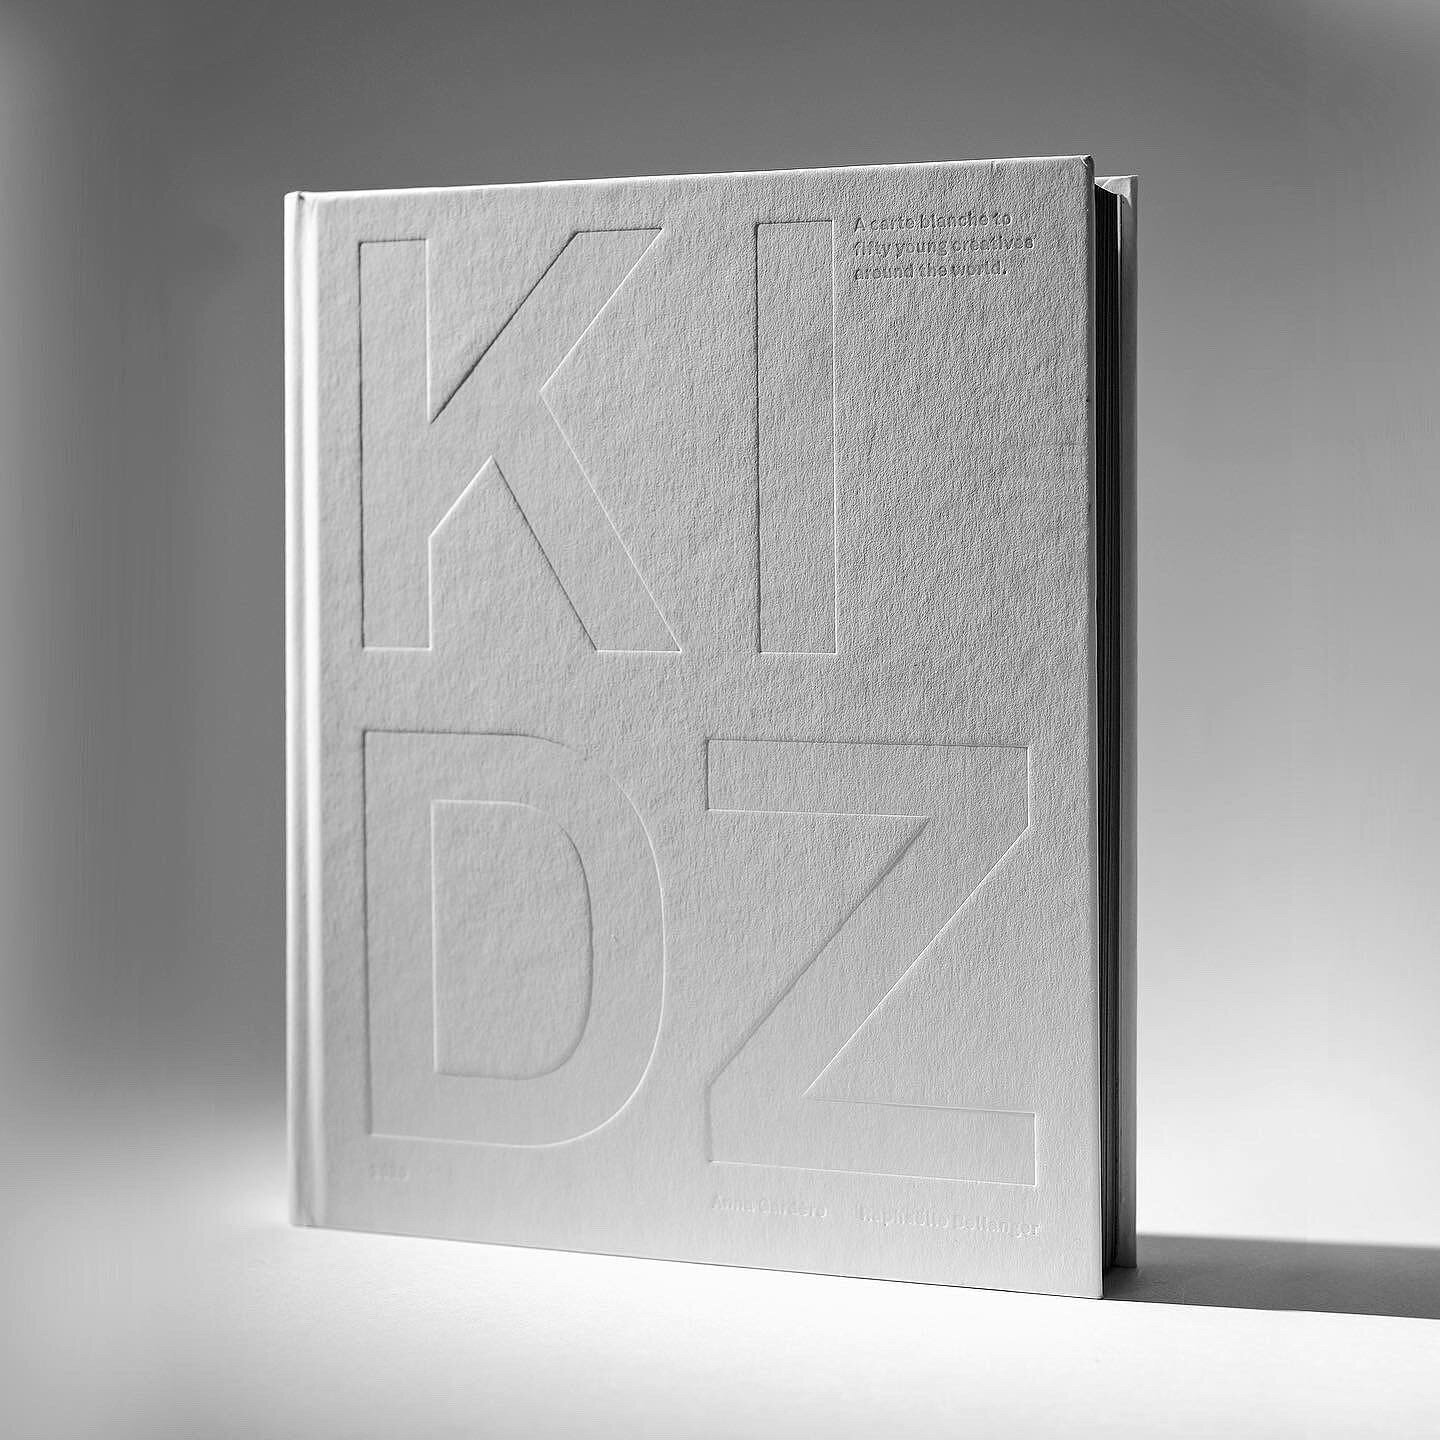 KIDZ 2020 | Published by Yard, 2020